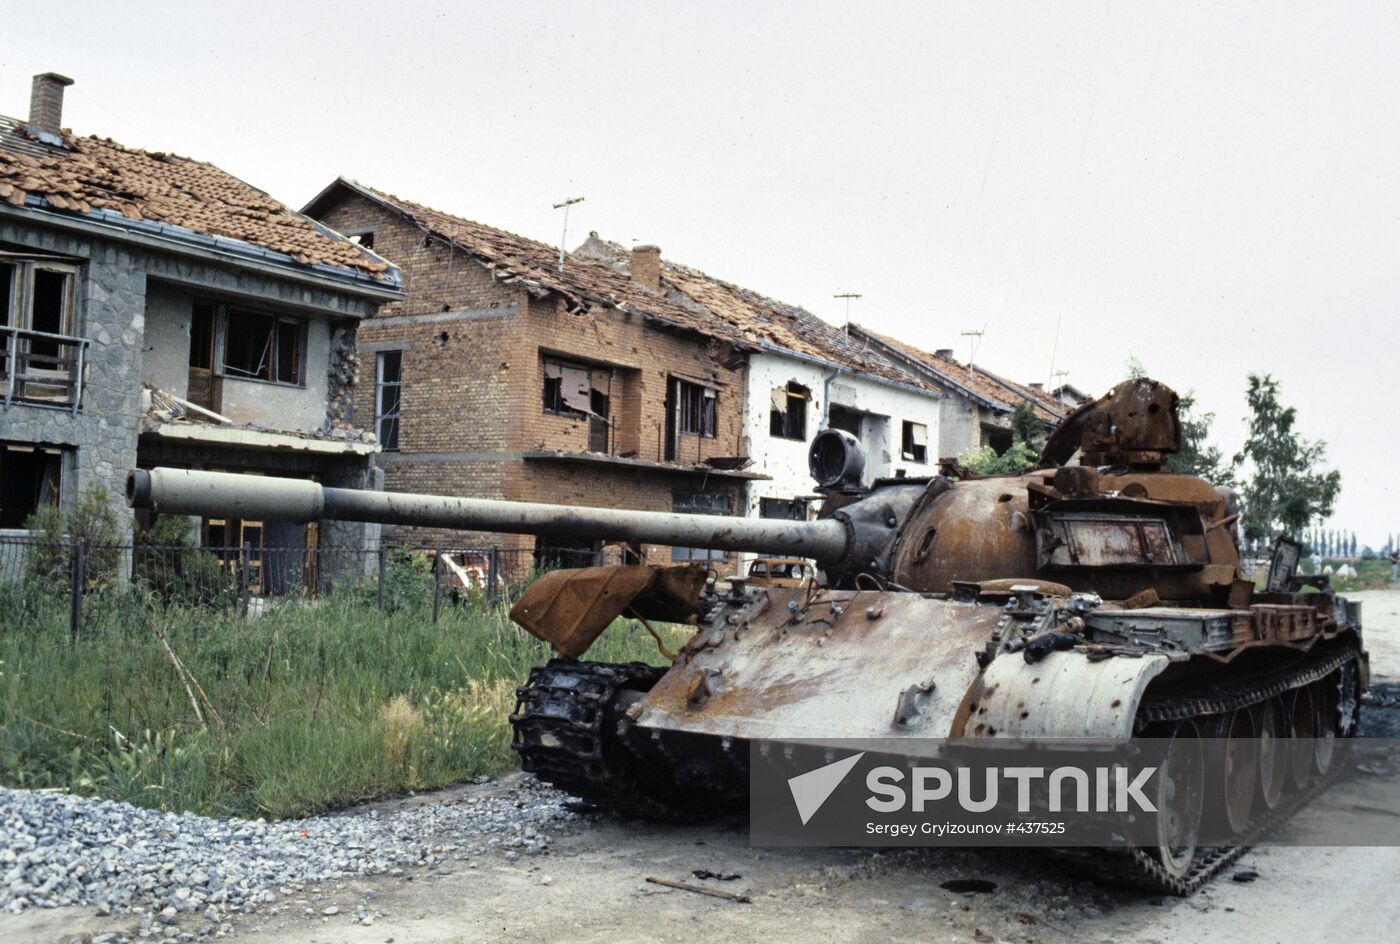 Destroyed tank in Tenja